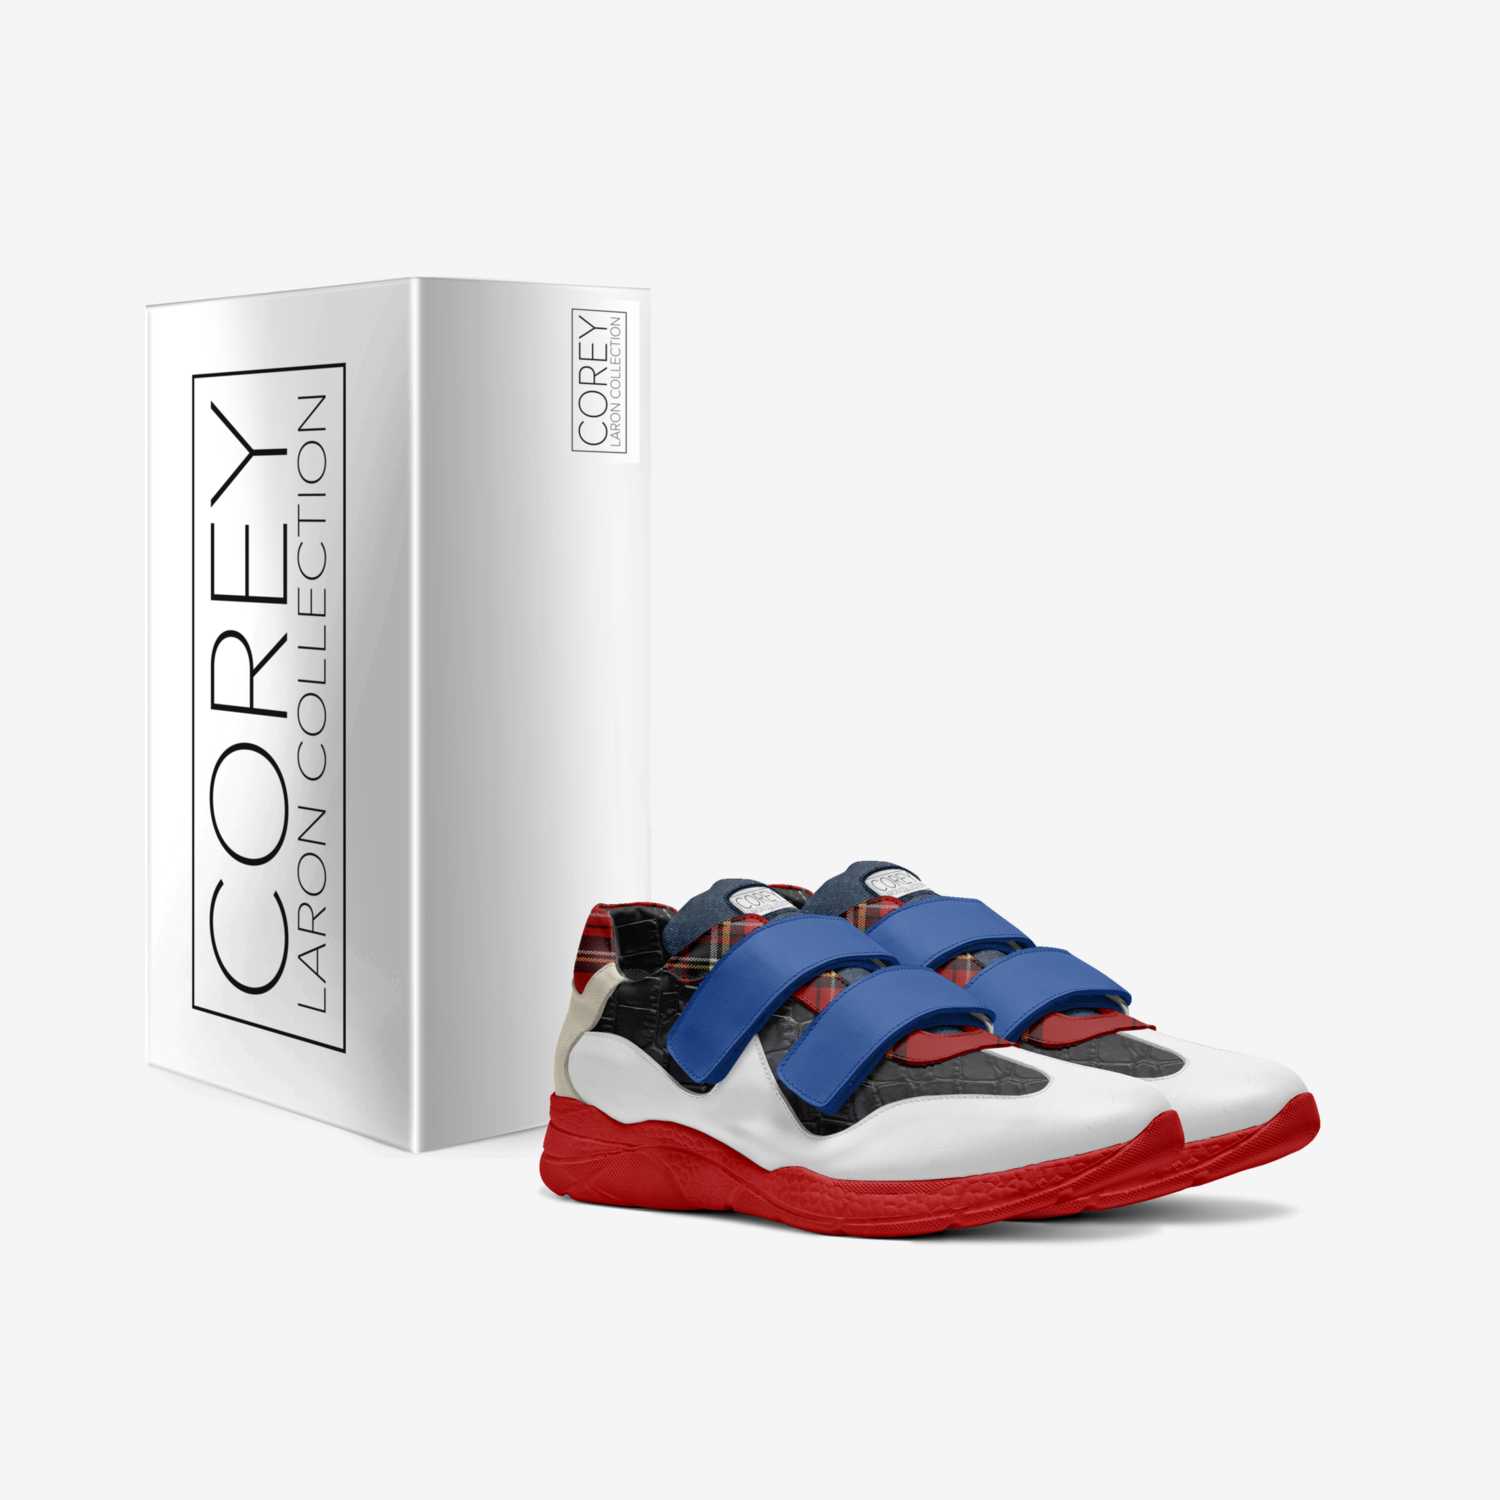 Corey Laron 4 custom made in Italy shoes by Corey Laron Hoskins Jr | Box view